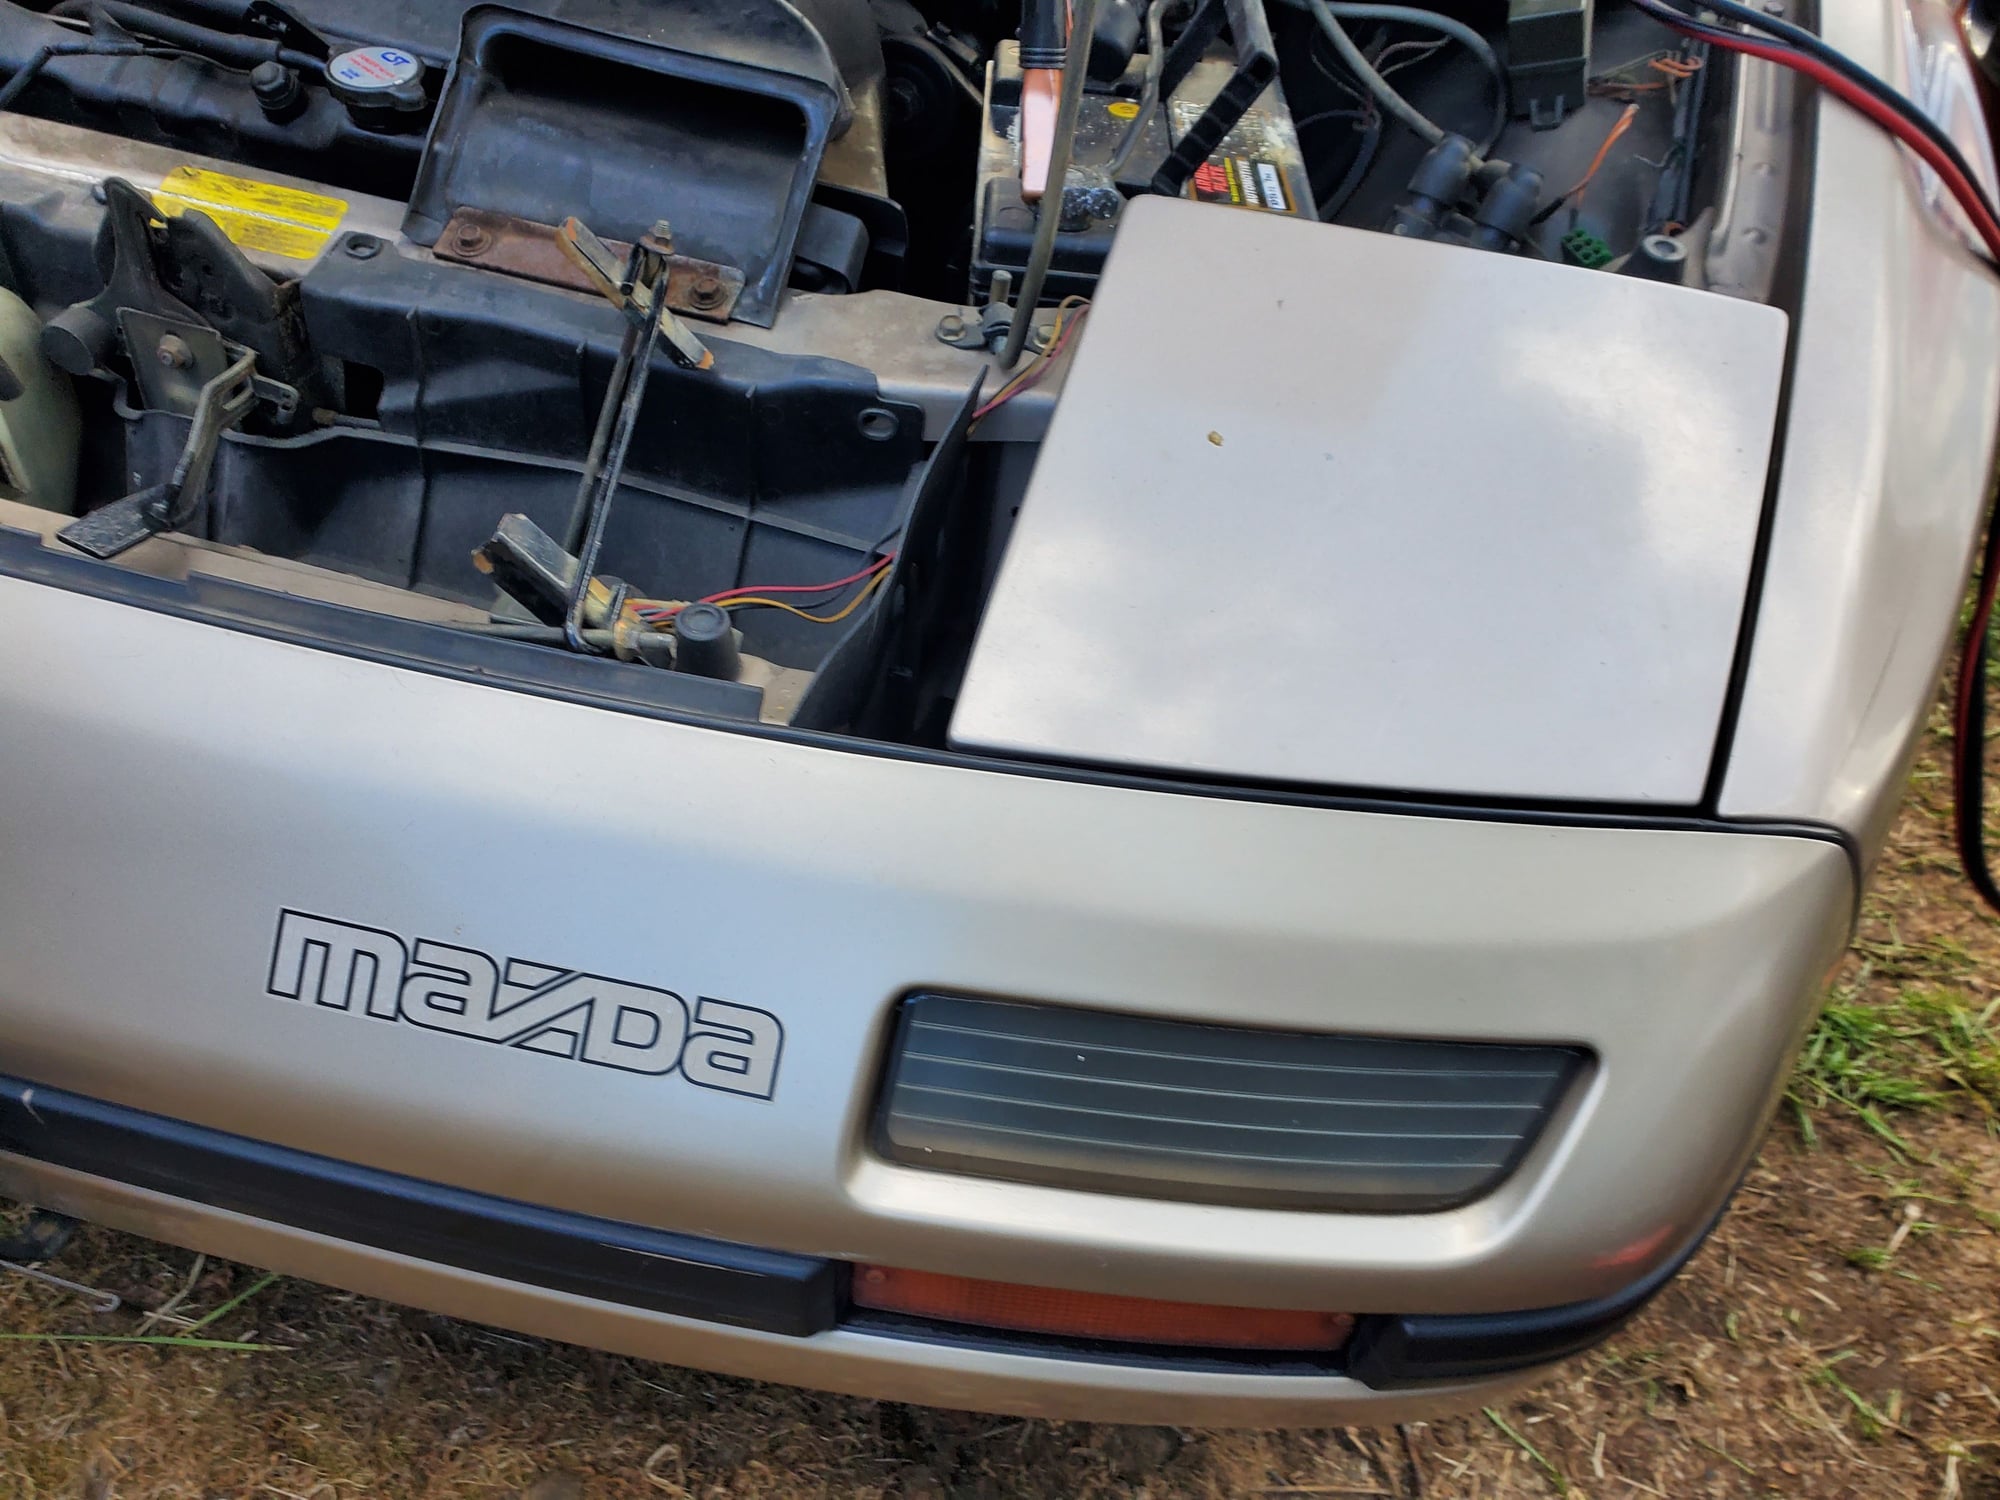 1986 Mazda RX-7 - 86 rx7 barn find - Used - VIN JM1FC3317G0146753 - Manual - Portland, OR 97267, United States